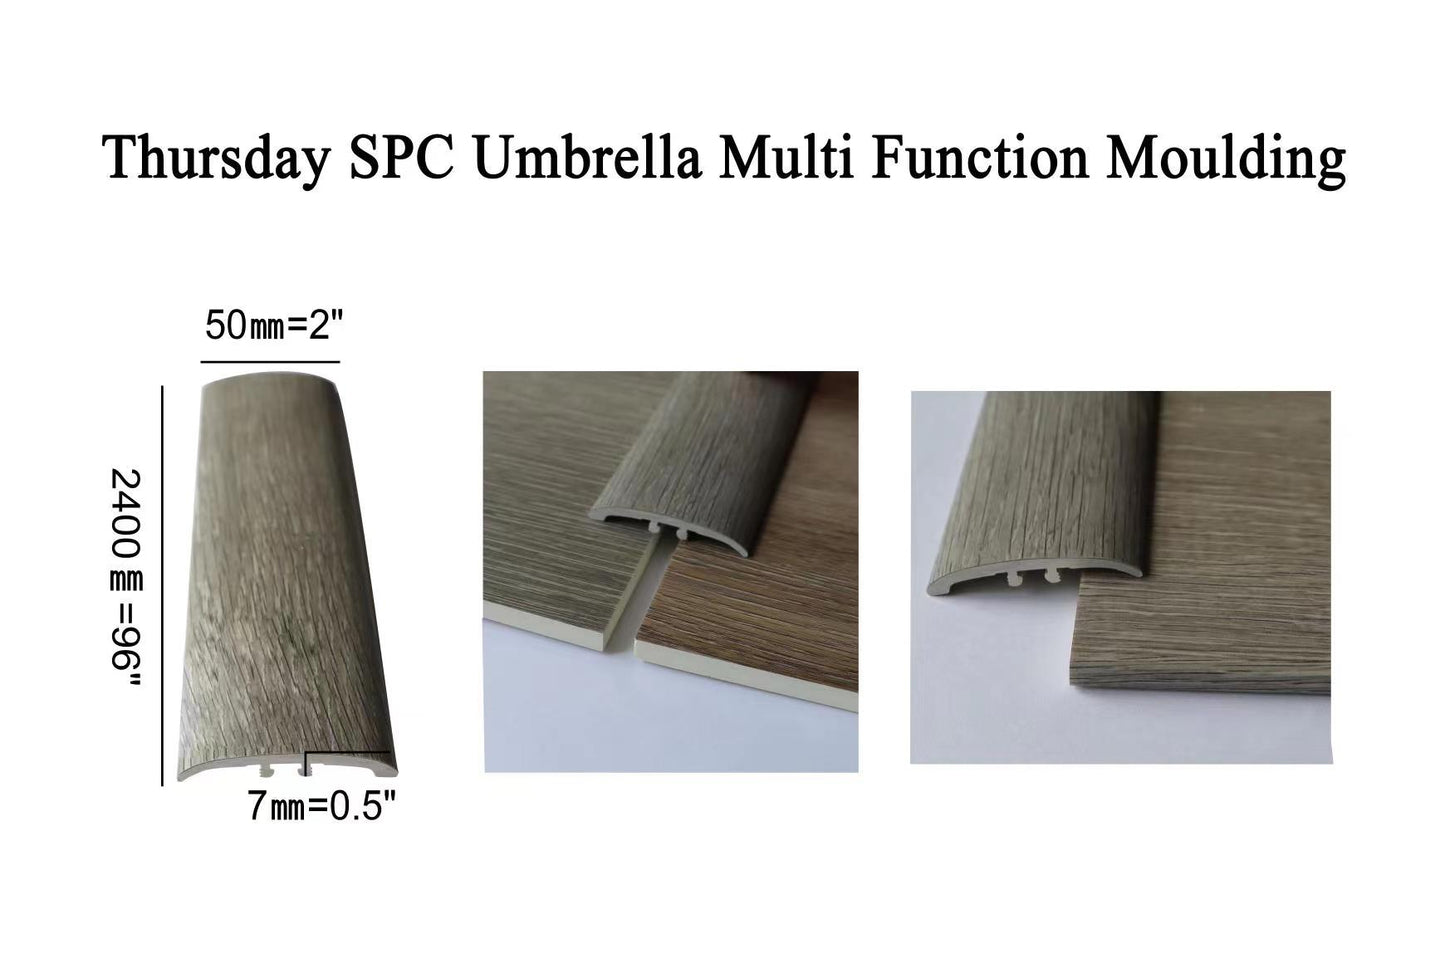 thursday umbrella multi purpose moulding 2400x50x7mm (95"H* 2"W  * 7mm d) 8 feet long $6/pc*